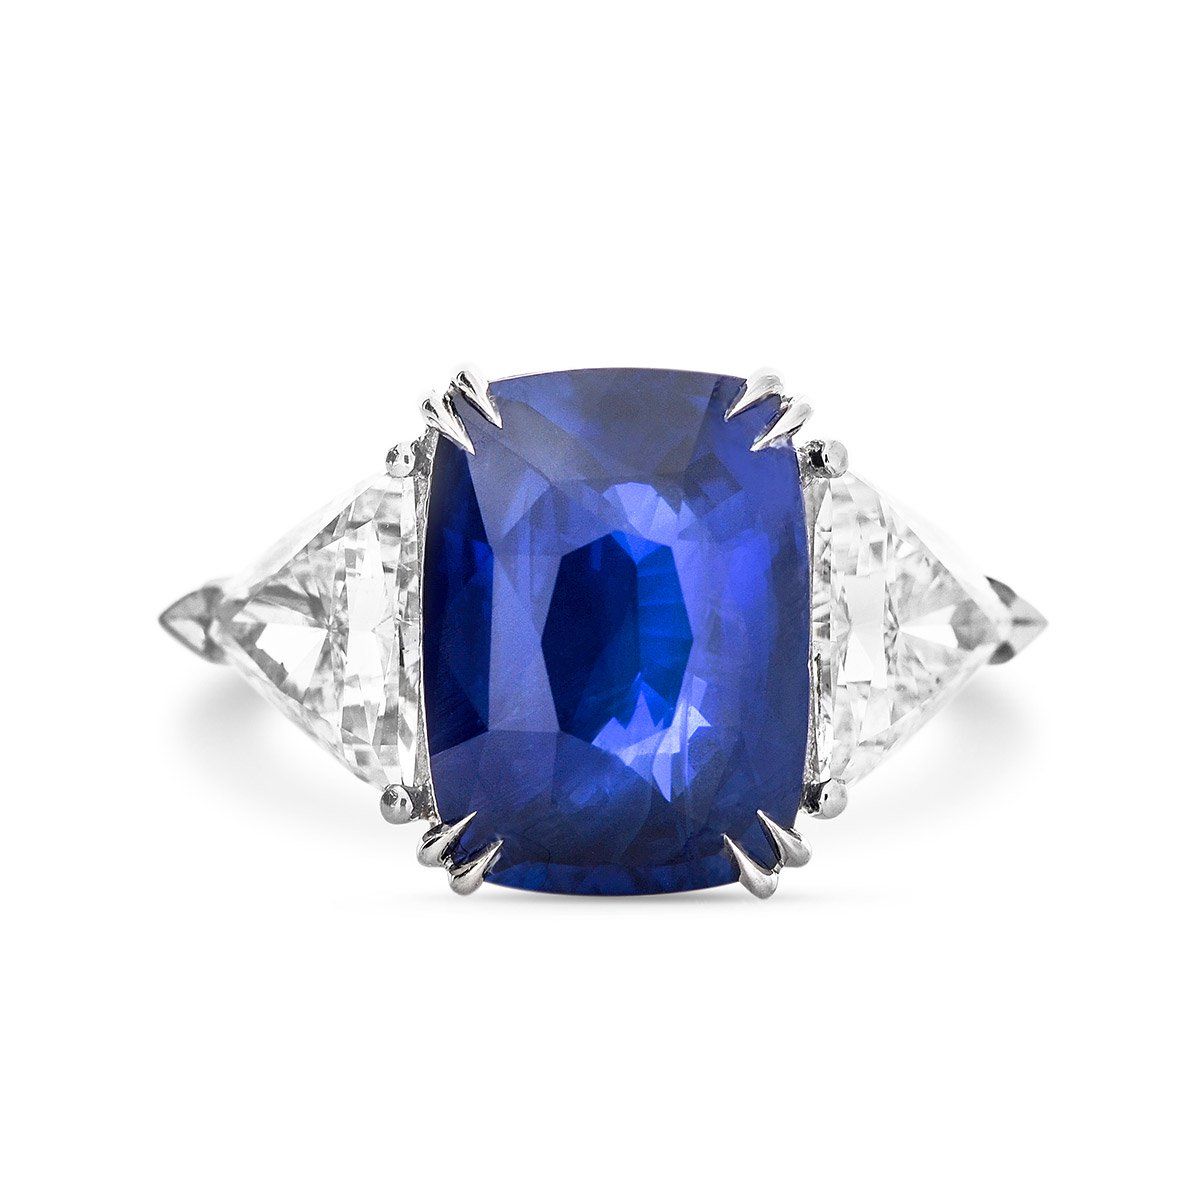 Natural Vivid Blue Sri-Lanka Sapphire Ring, 9.06 Ct. TW, IGL Certified, JCRG05313848, Unheated